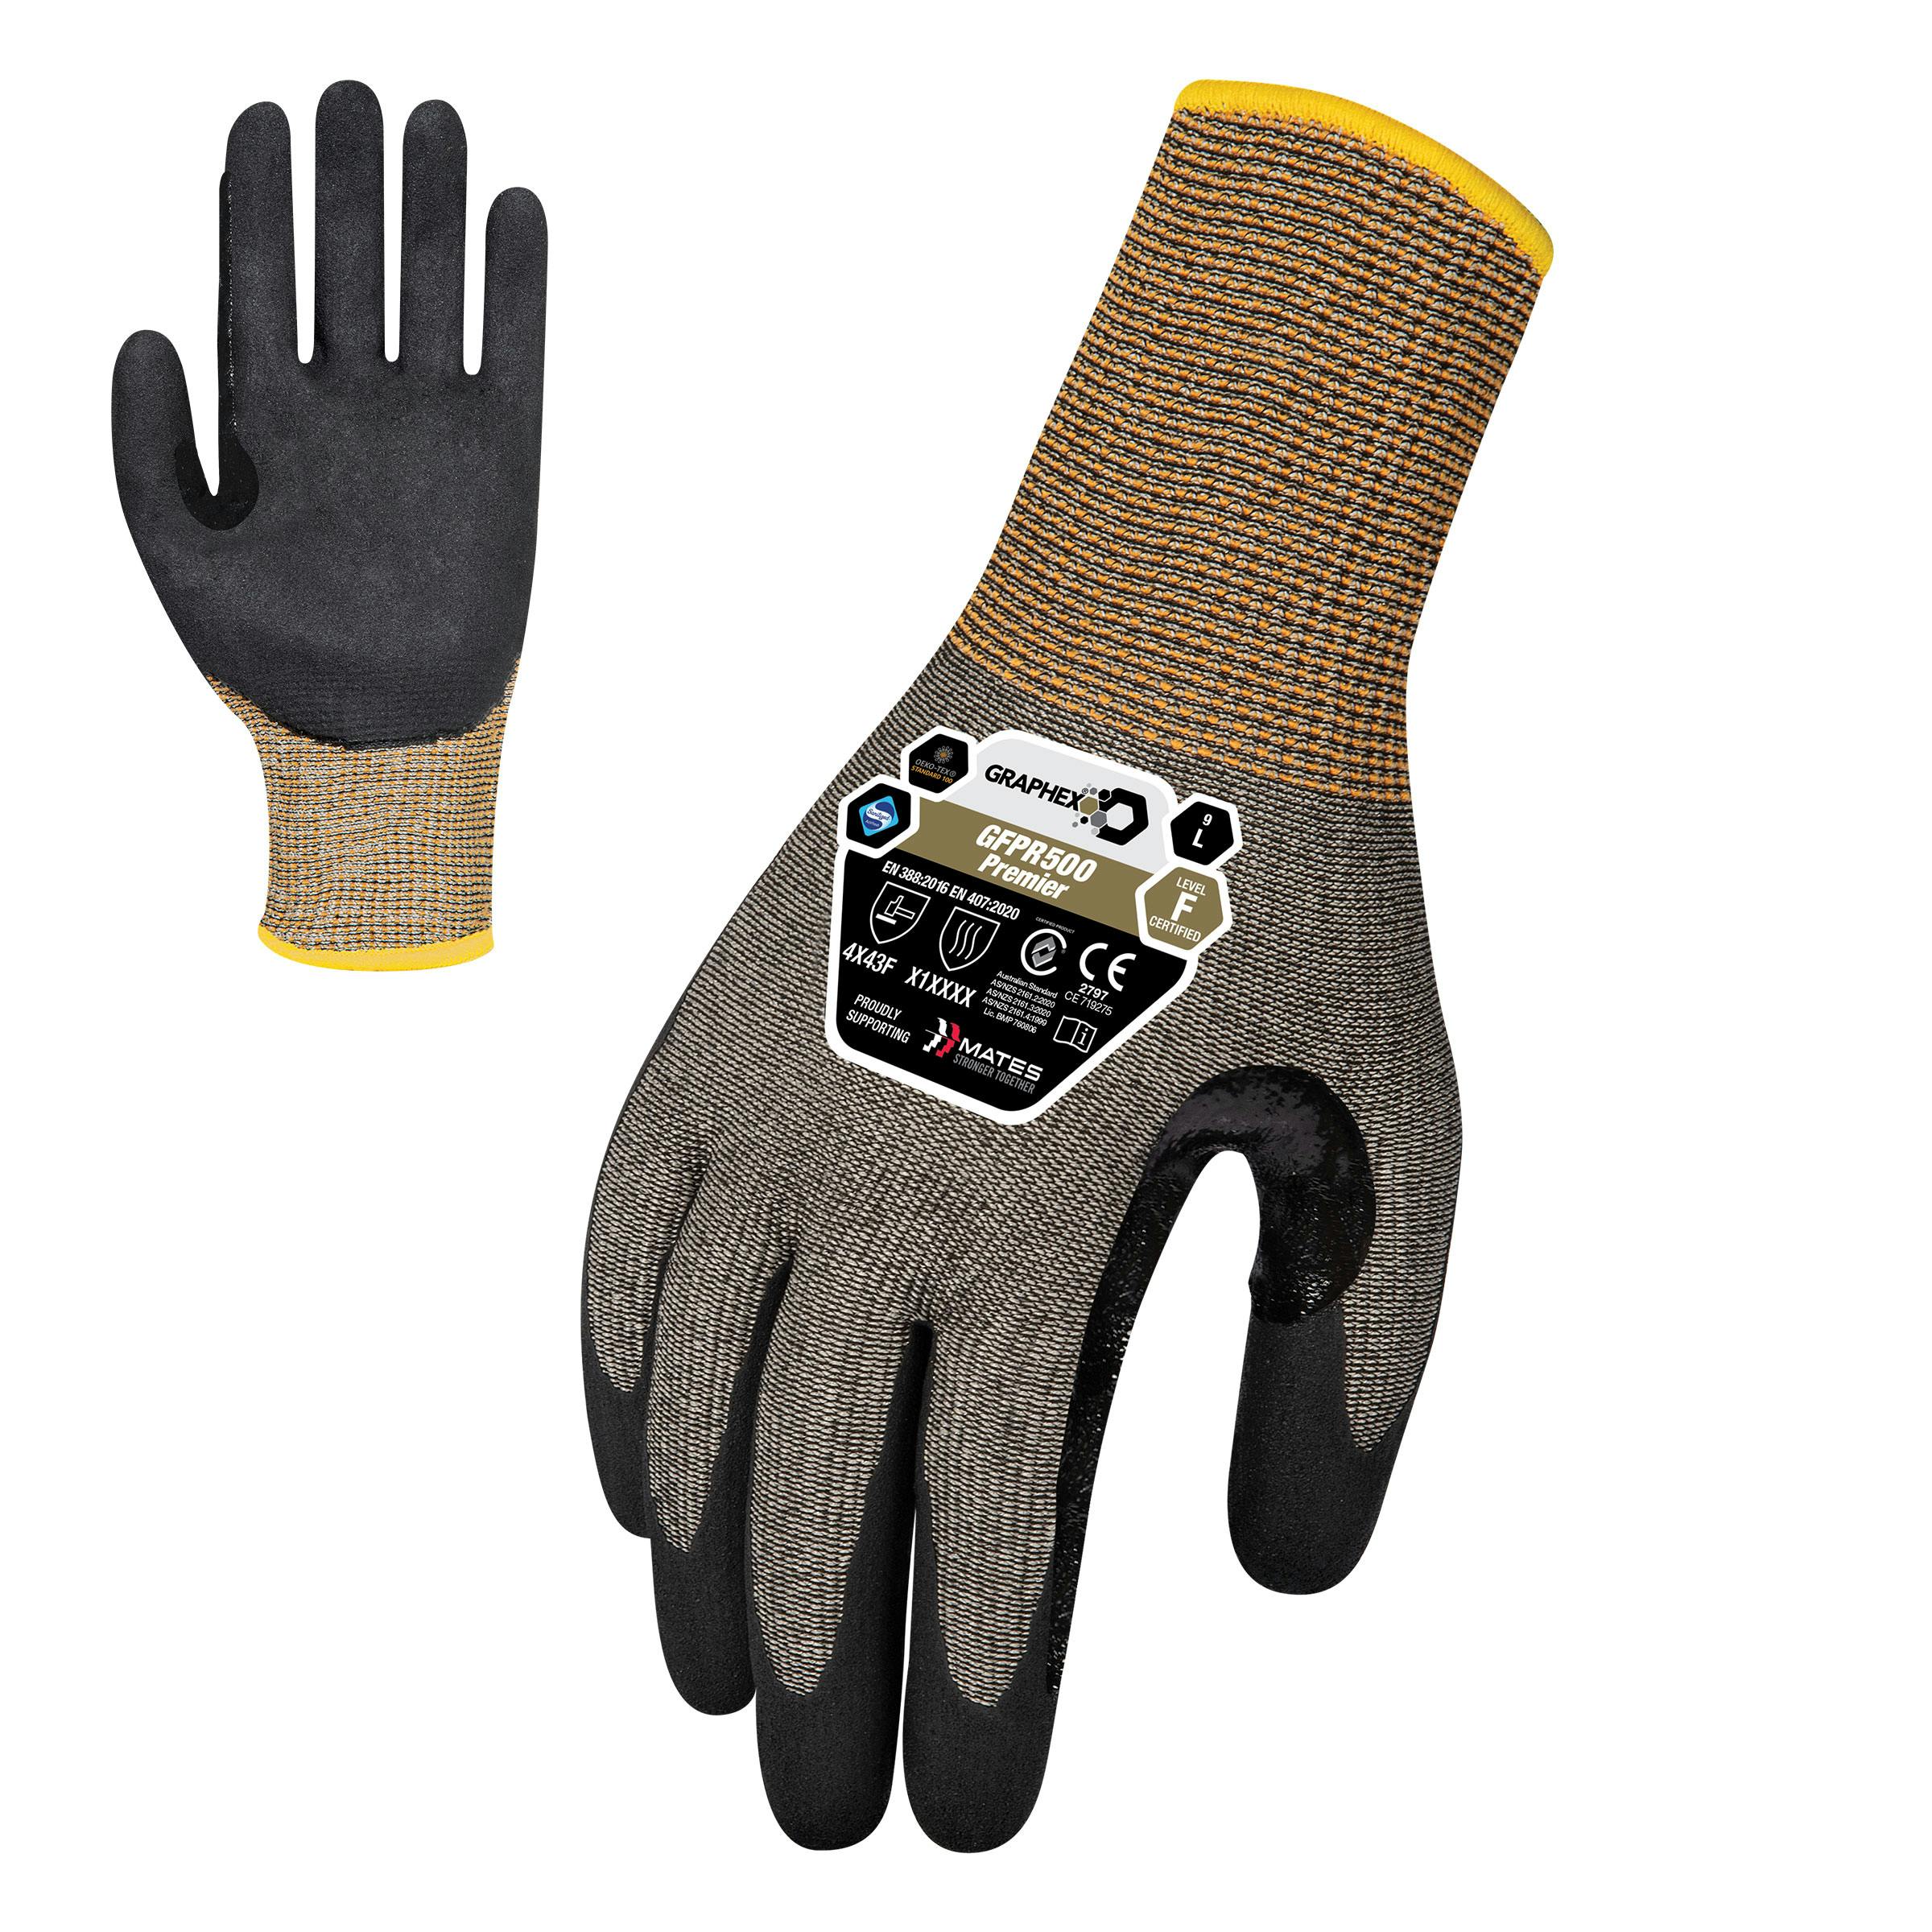 Graphex Premier Cut Glove (Cut Level F)